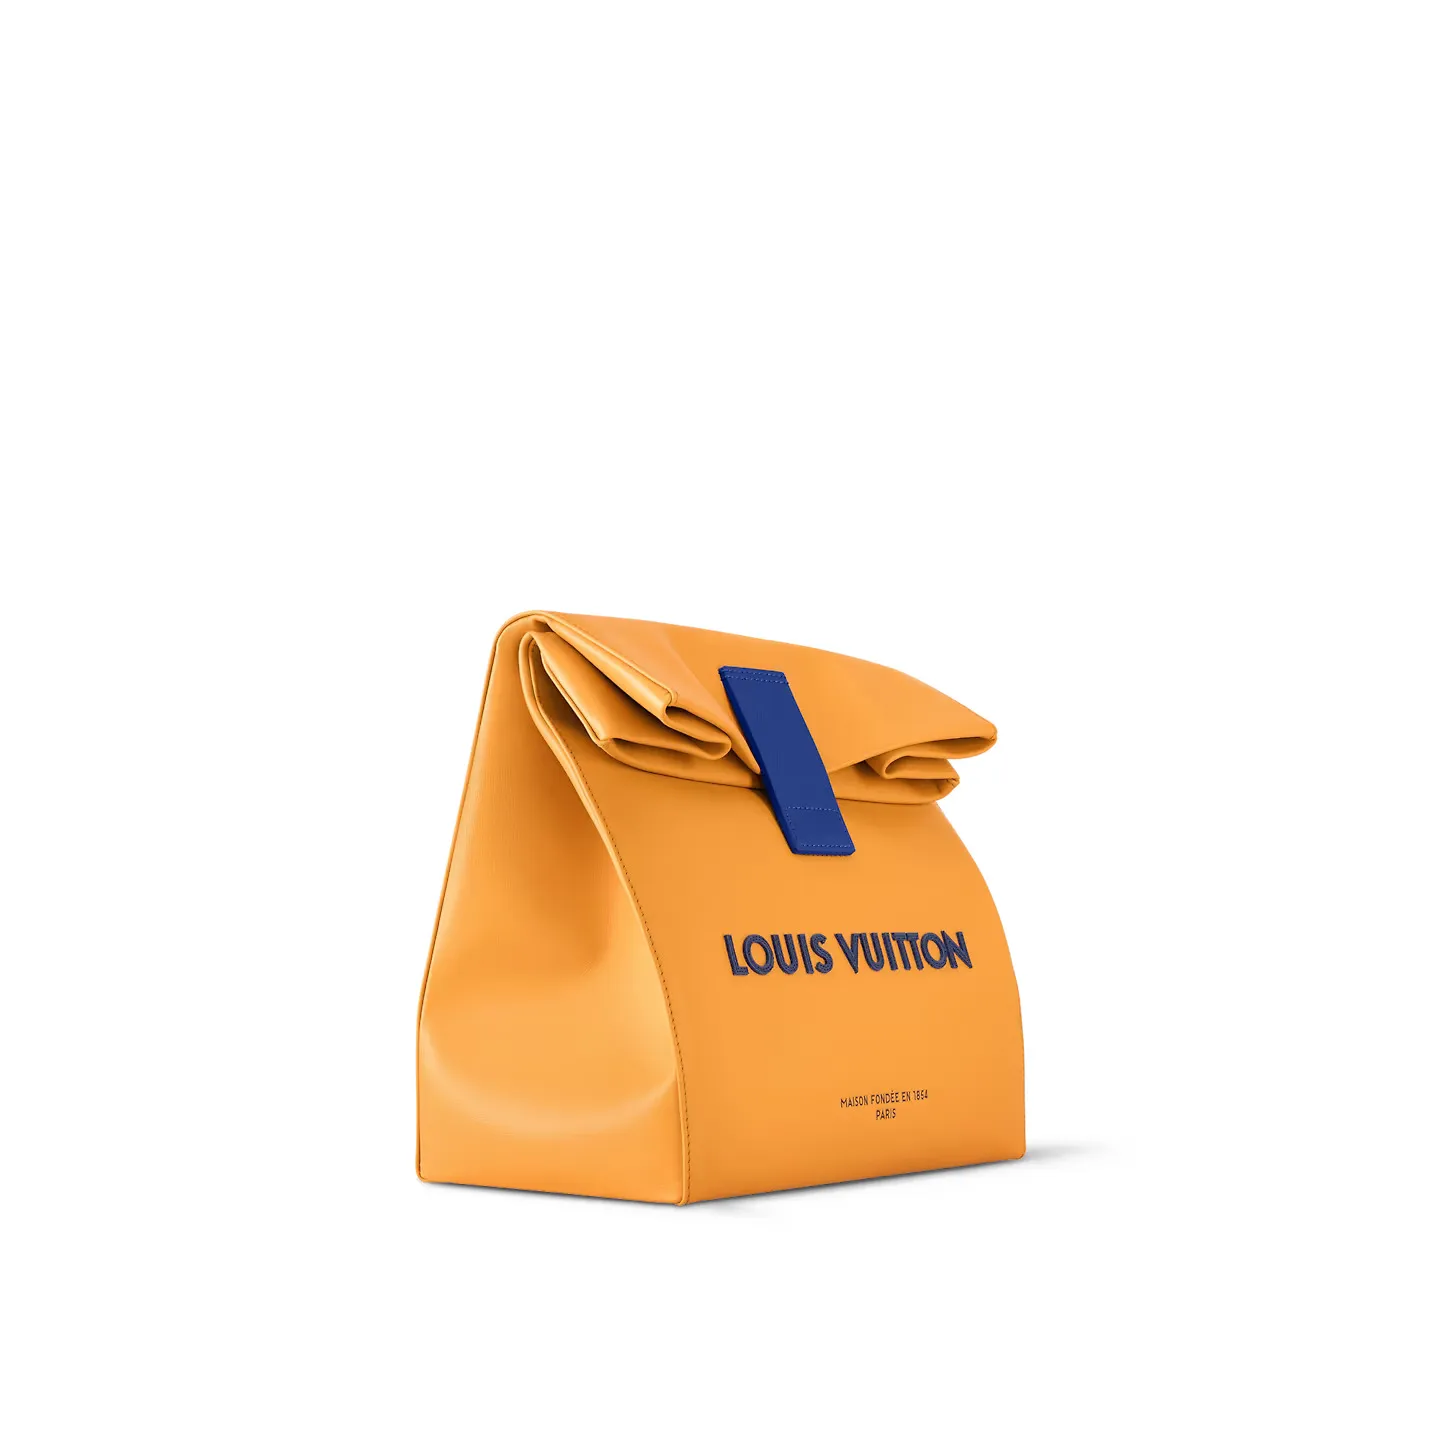 Сумка в форме пакета для бутербродов / Фото с сайта Louis Vuitton